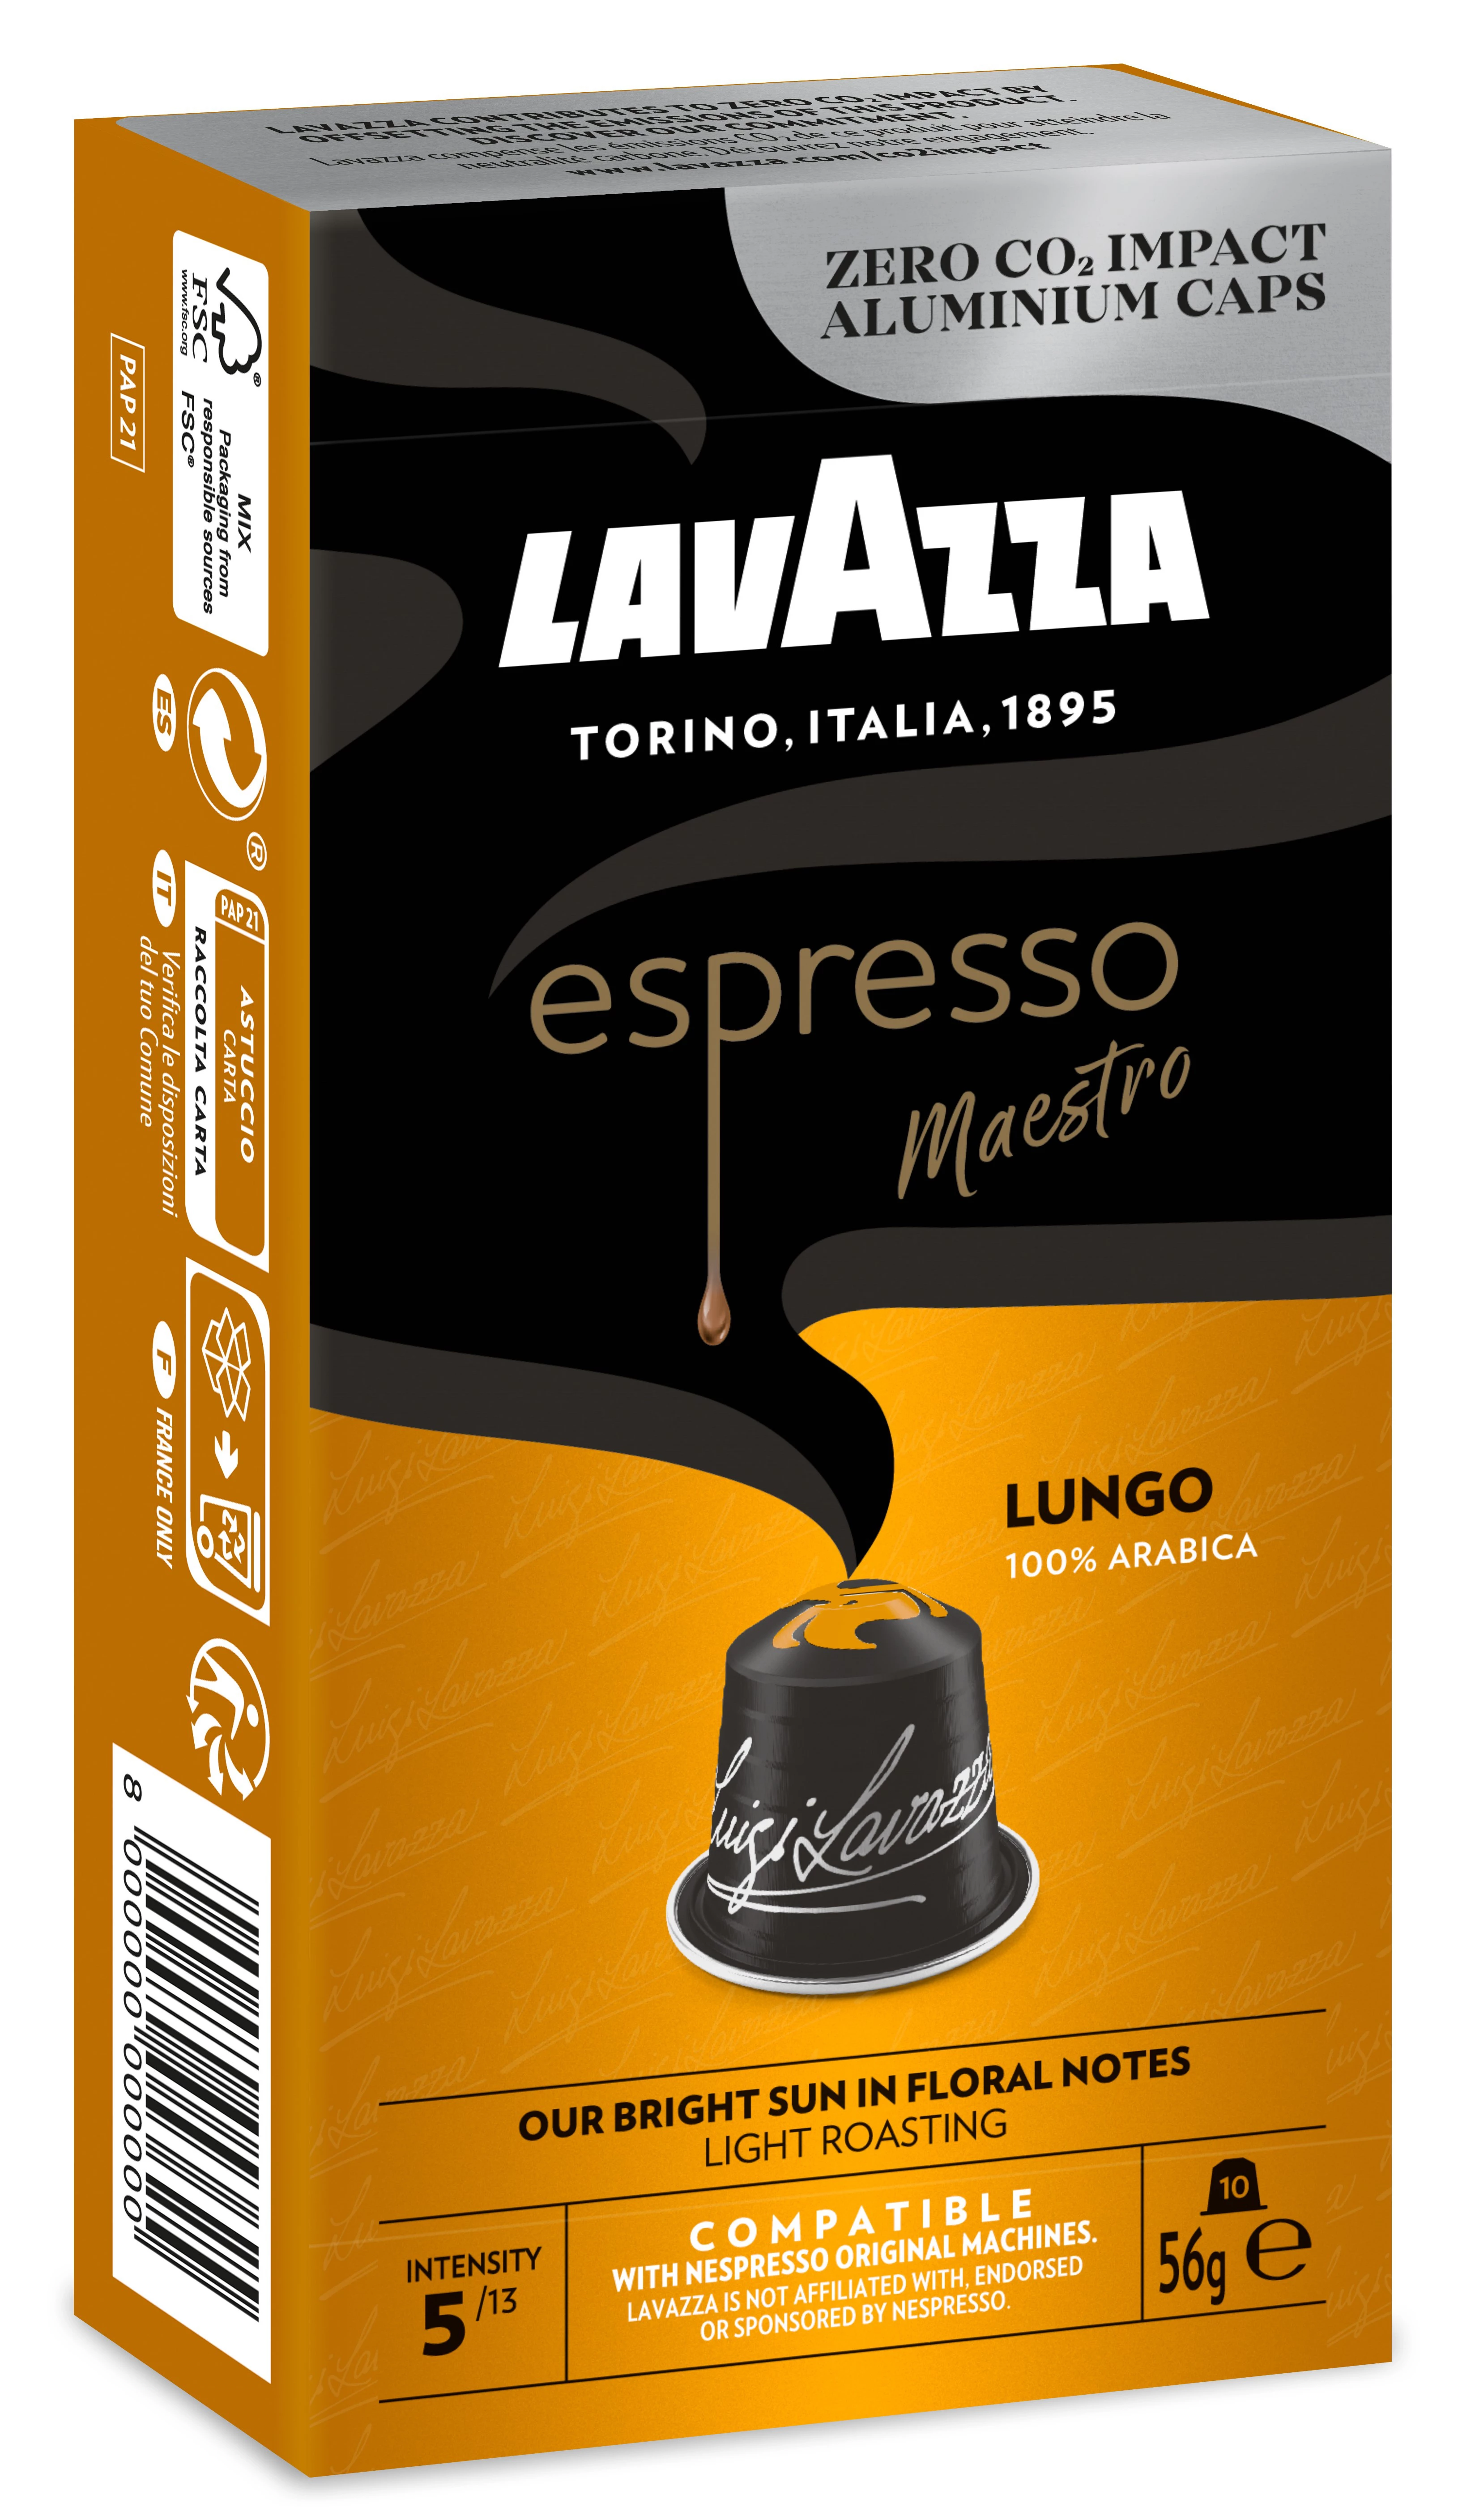 Капсулы Café Espresso Maestro Lungo Совместимые продукты Nespresso; х10; 56г - LAVAZZA